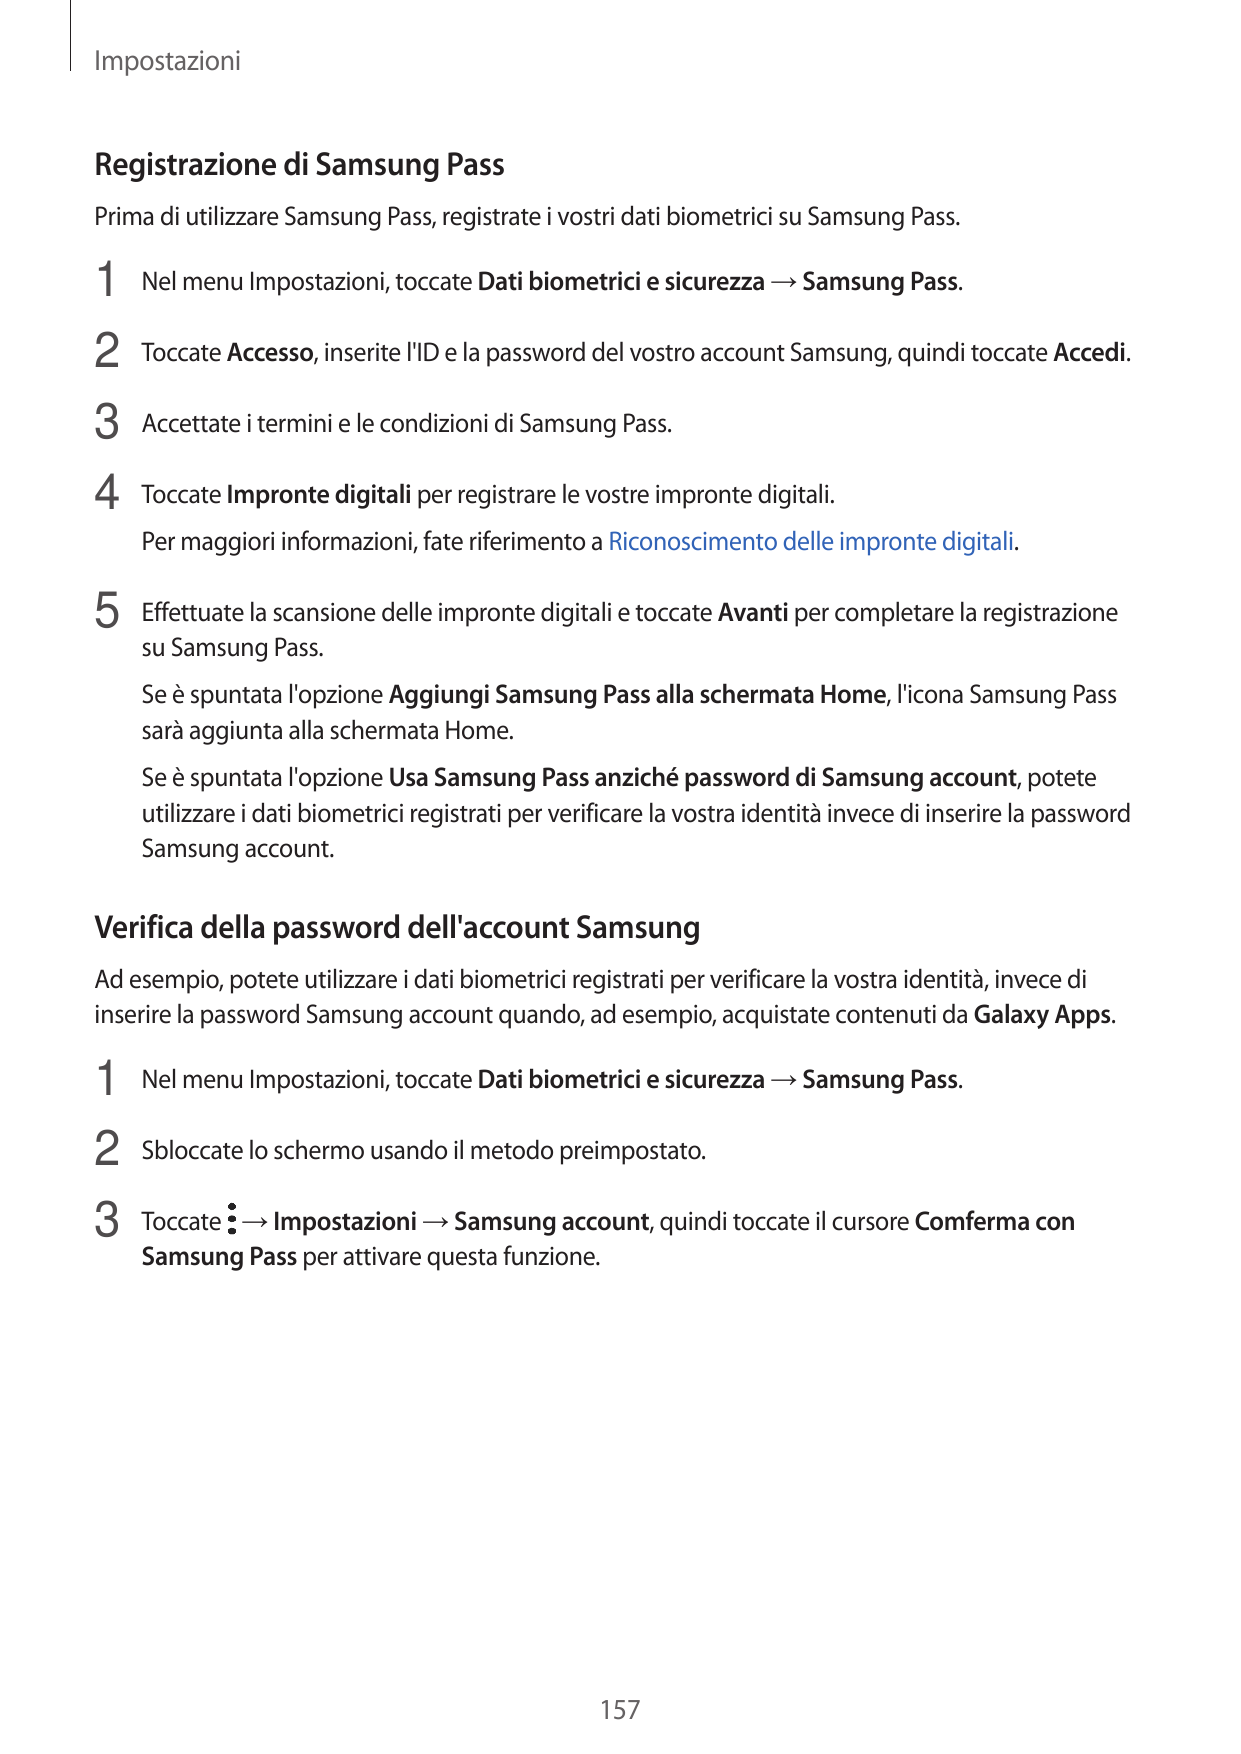 ImpostazioniRegistrazione di Samsung PassPrima di utilizzare Samsung Pass, registrate i vostri dati biometrici su Samsung Pass.1